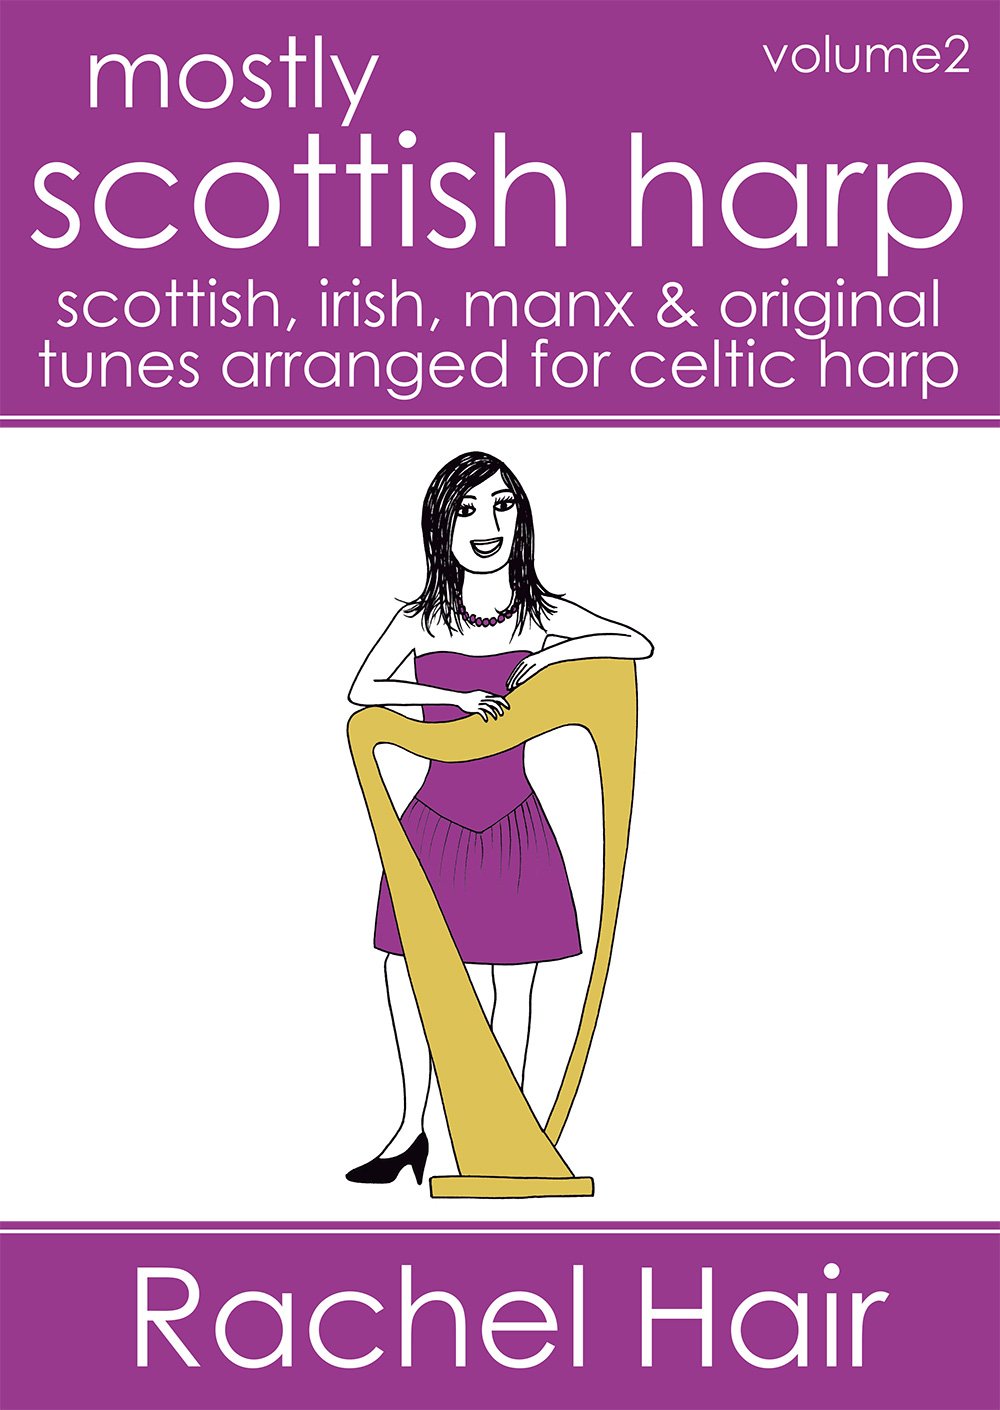 Mostly Scottish Harp Vol2